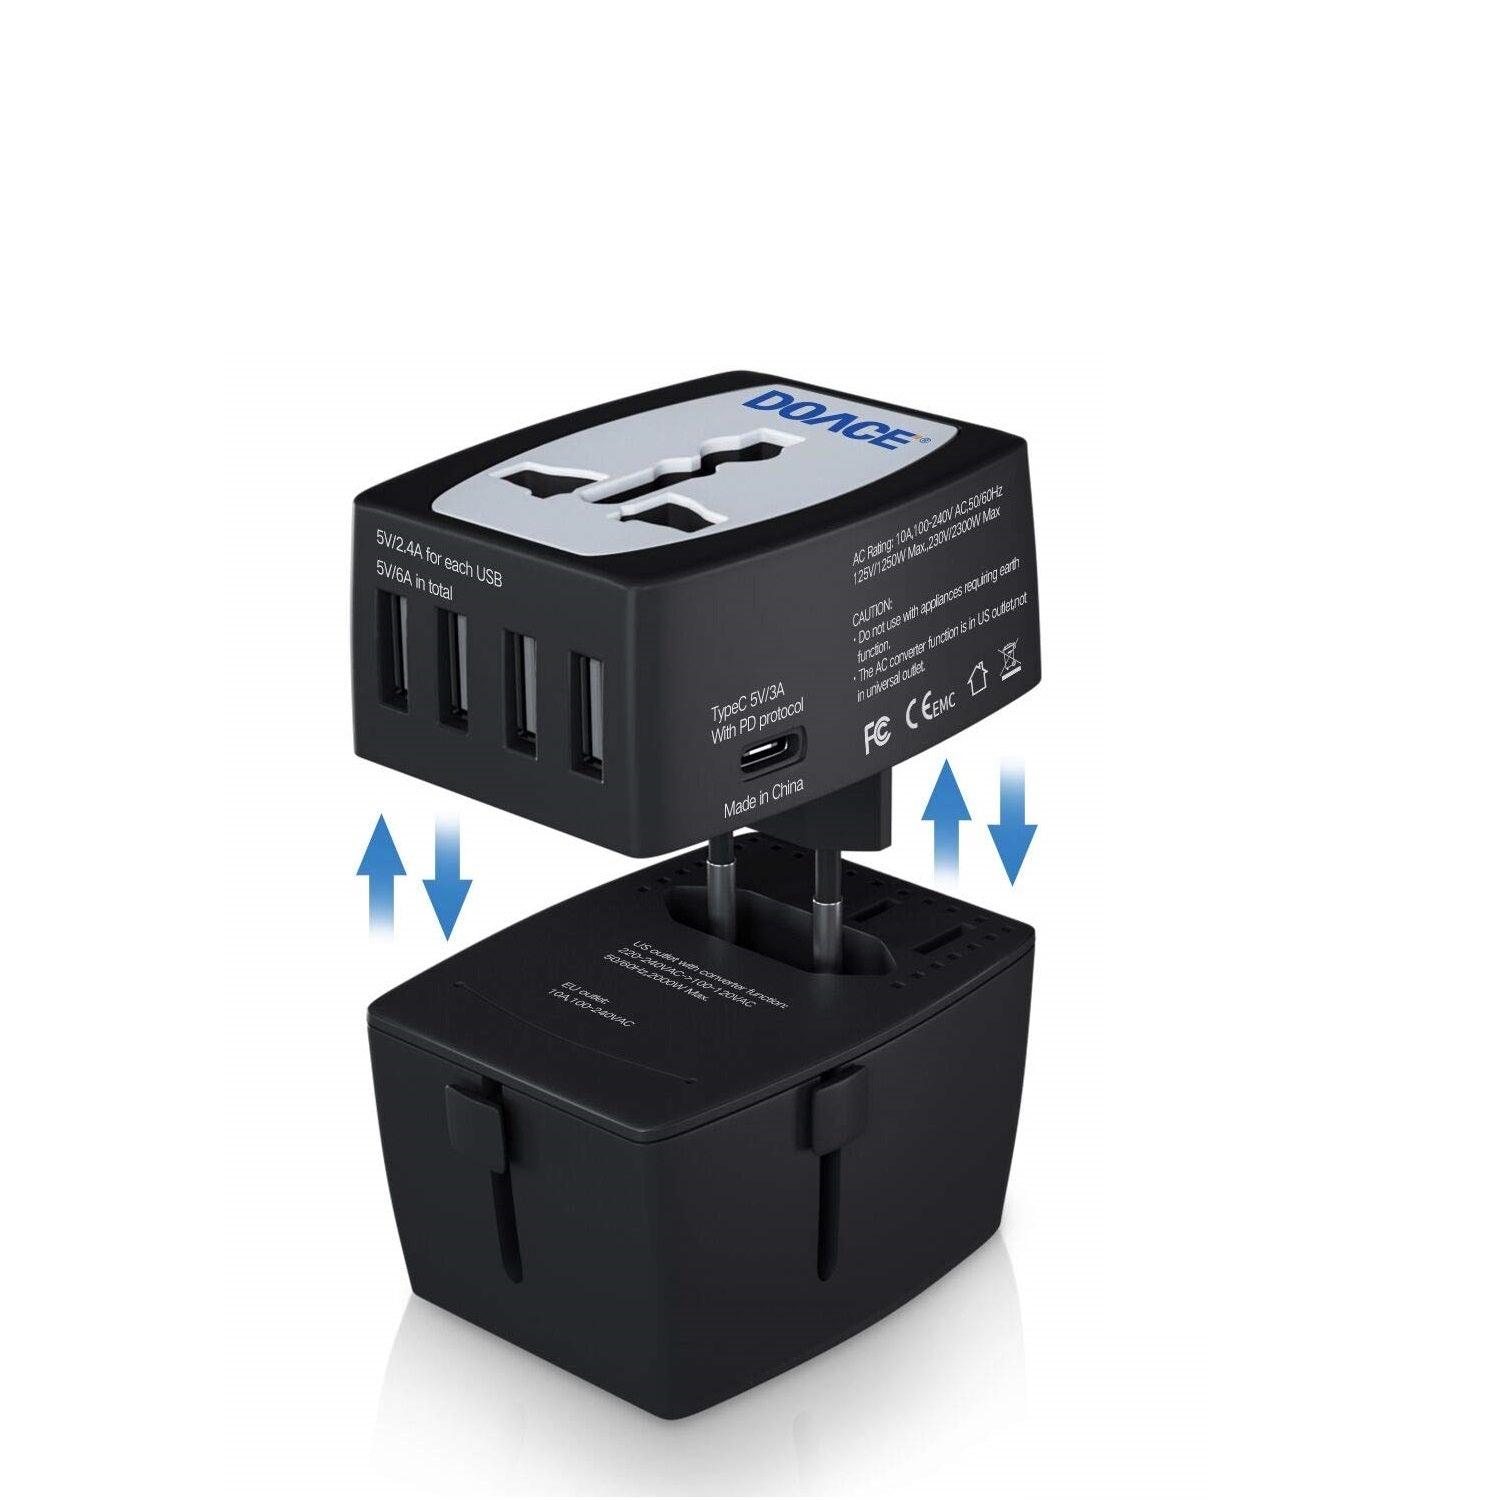 Wholesale DOACE M9 Travel Voltage Converter - DOACE Direct